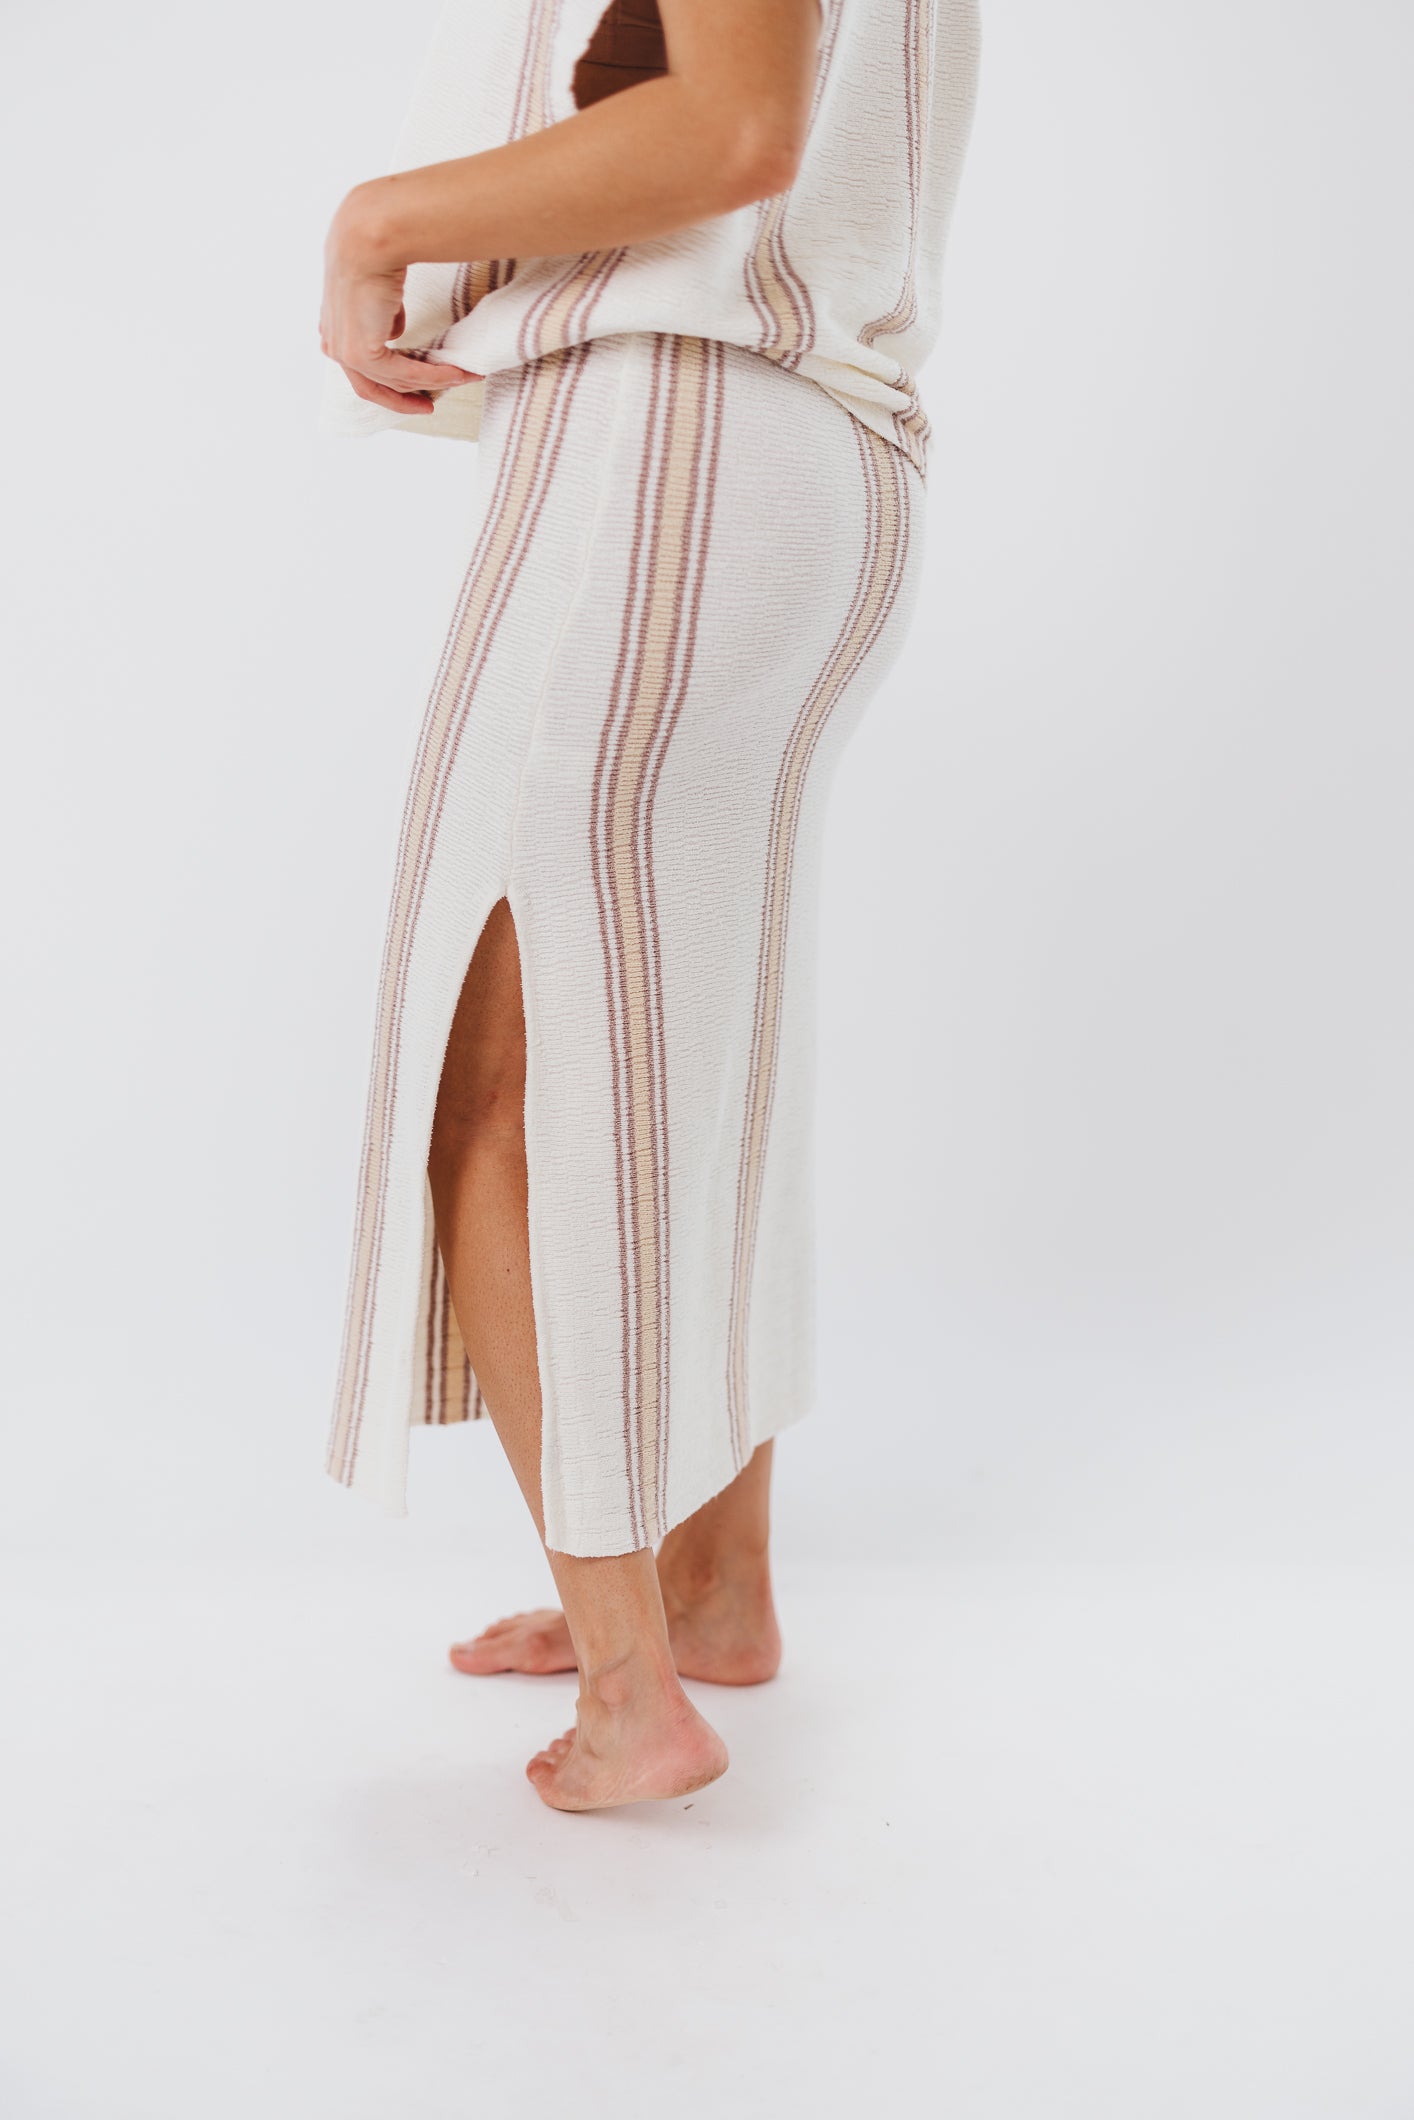 Marjorie Knit V-Neck and Midi Skirt Set in Ivory/Taupe Stripe